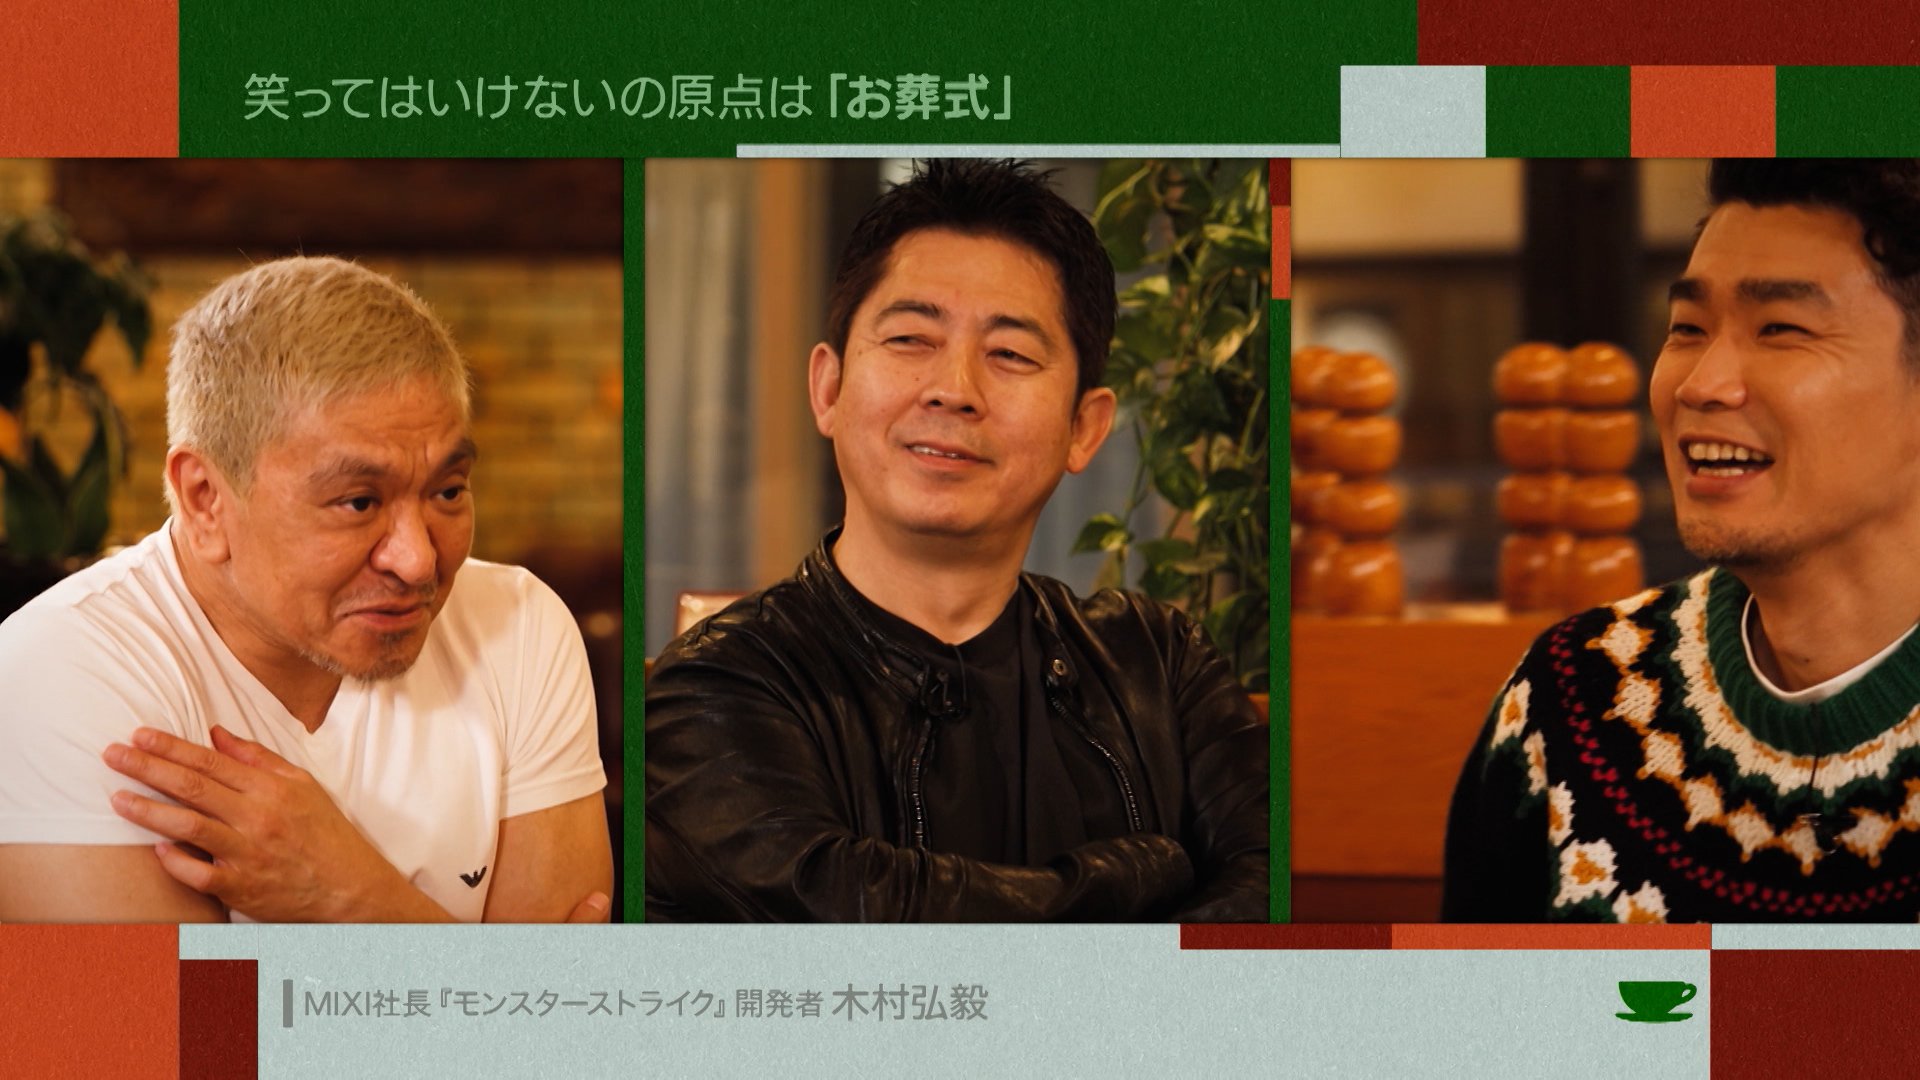 FANY マガジン：松本人志と高須光聖らおっさんたちが、茶飲み話をしながら、これから始まる新しい世界と出会う番組『お茶とおっさん』